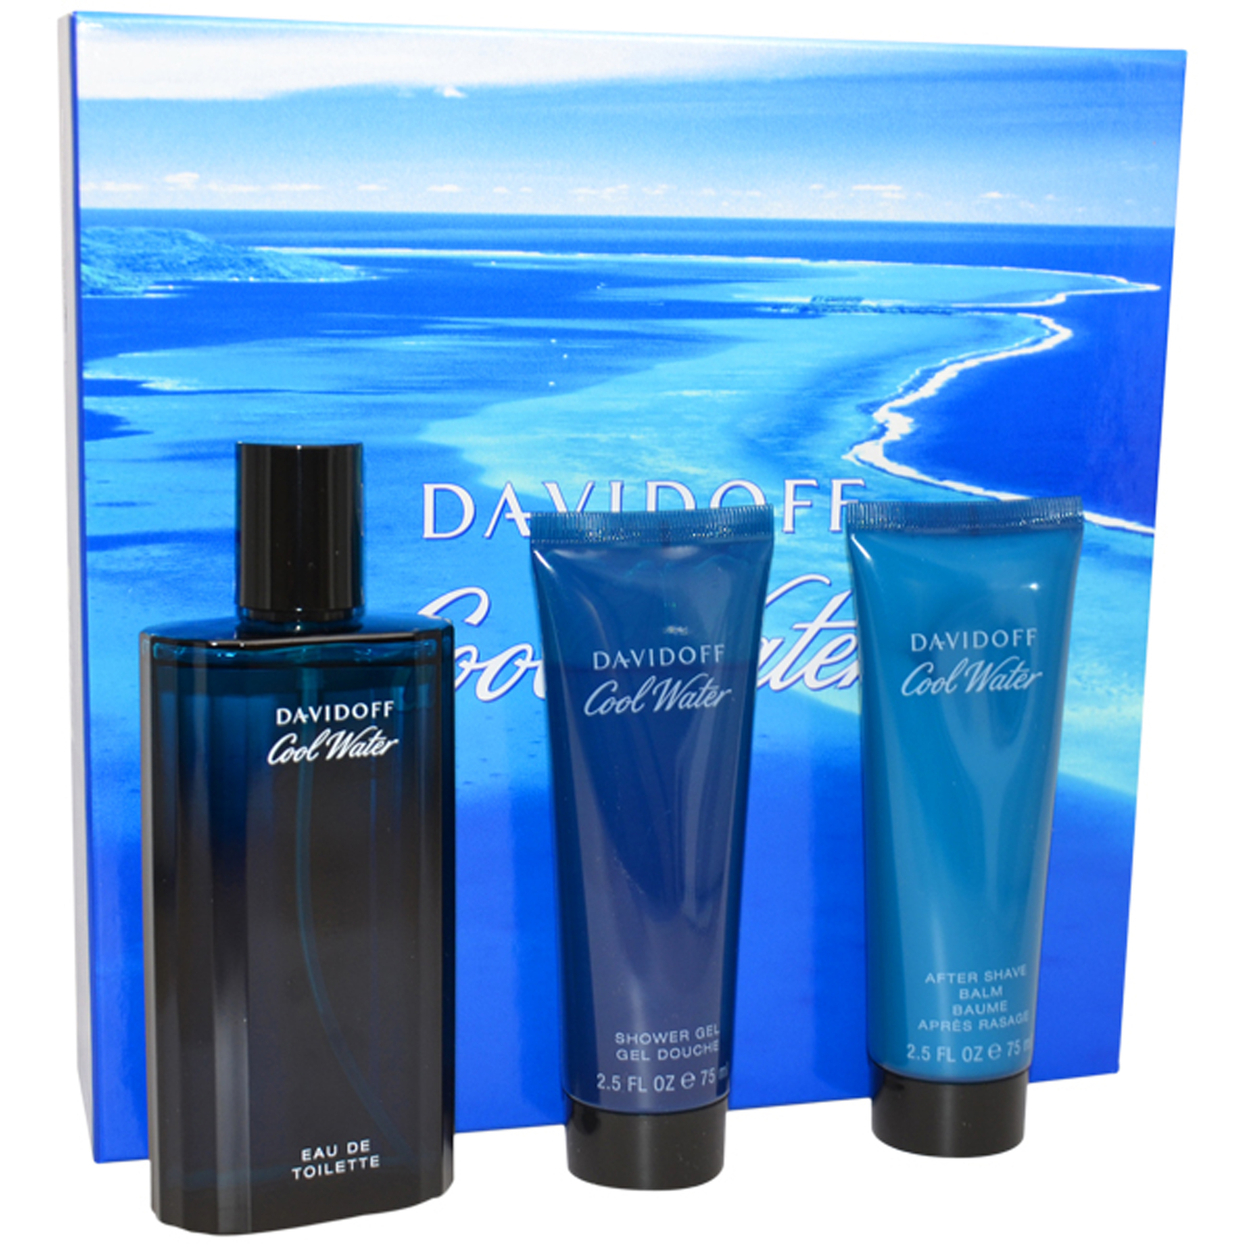 Davidoff Cool Water 4.2oz EDT Spray, 2.5oz Shower Gel, 2.5oz After Shave Balm 3 Pc Gift Set